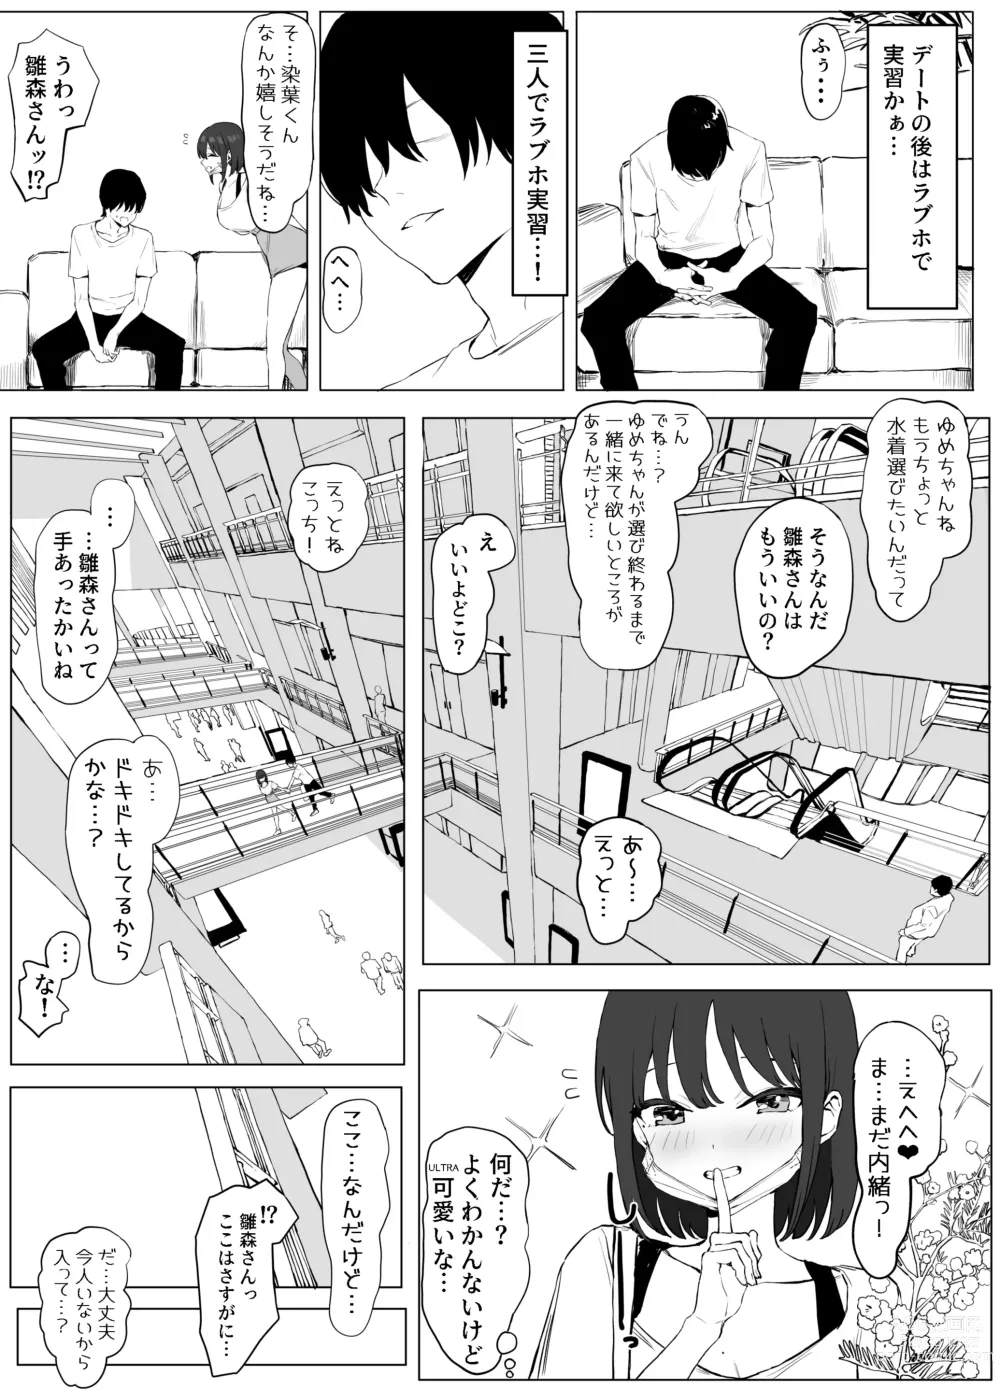 Page 9 of doujinshi Seikoui Jisshuu 2